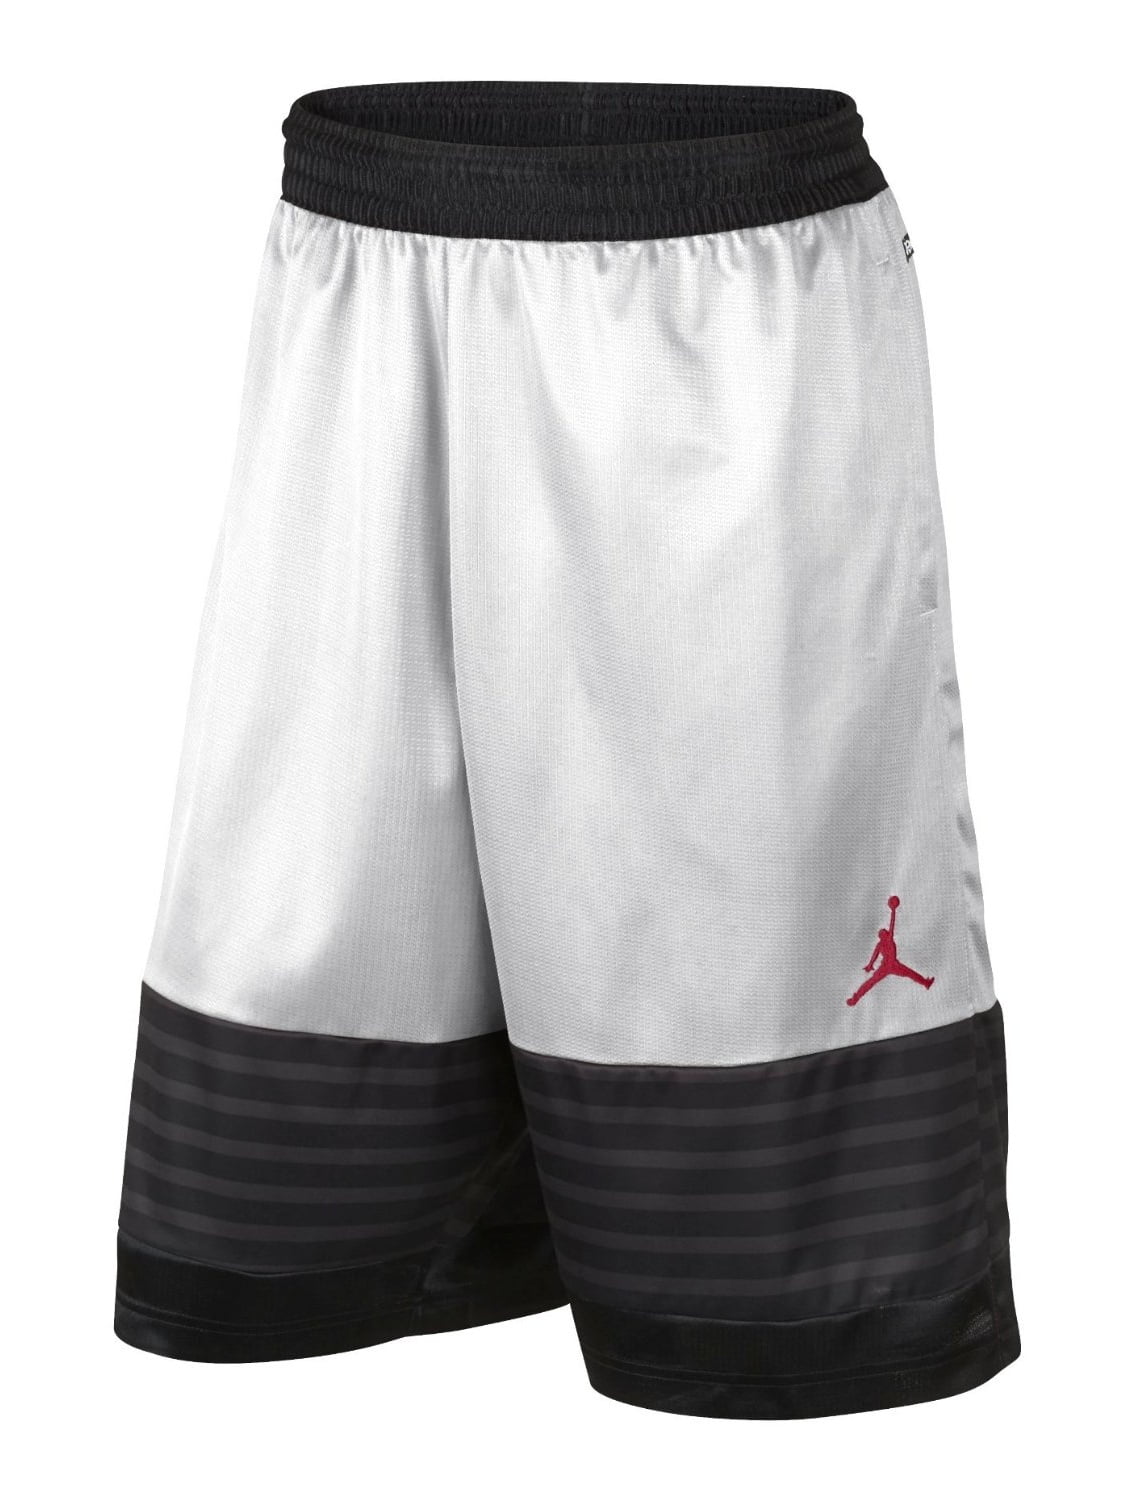 Jordan Mens X Basketball Shorts White - Walmart.com